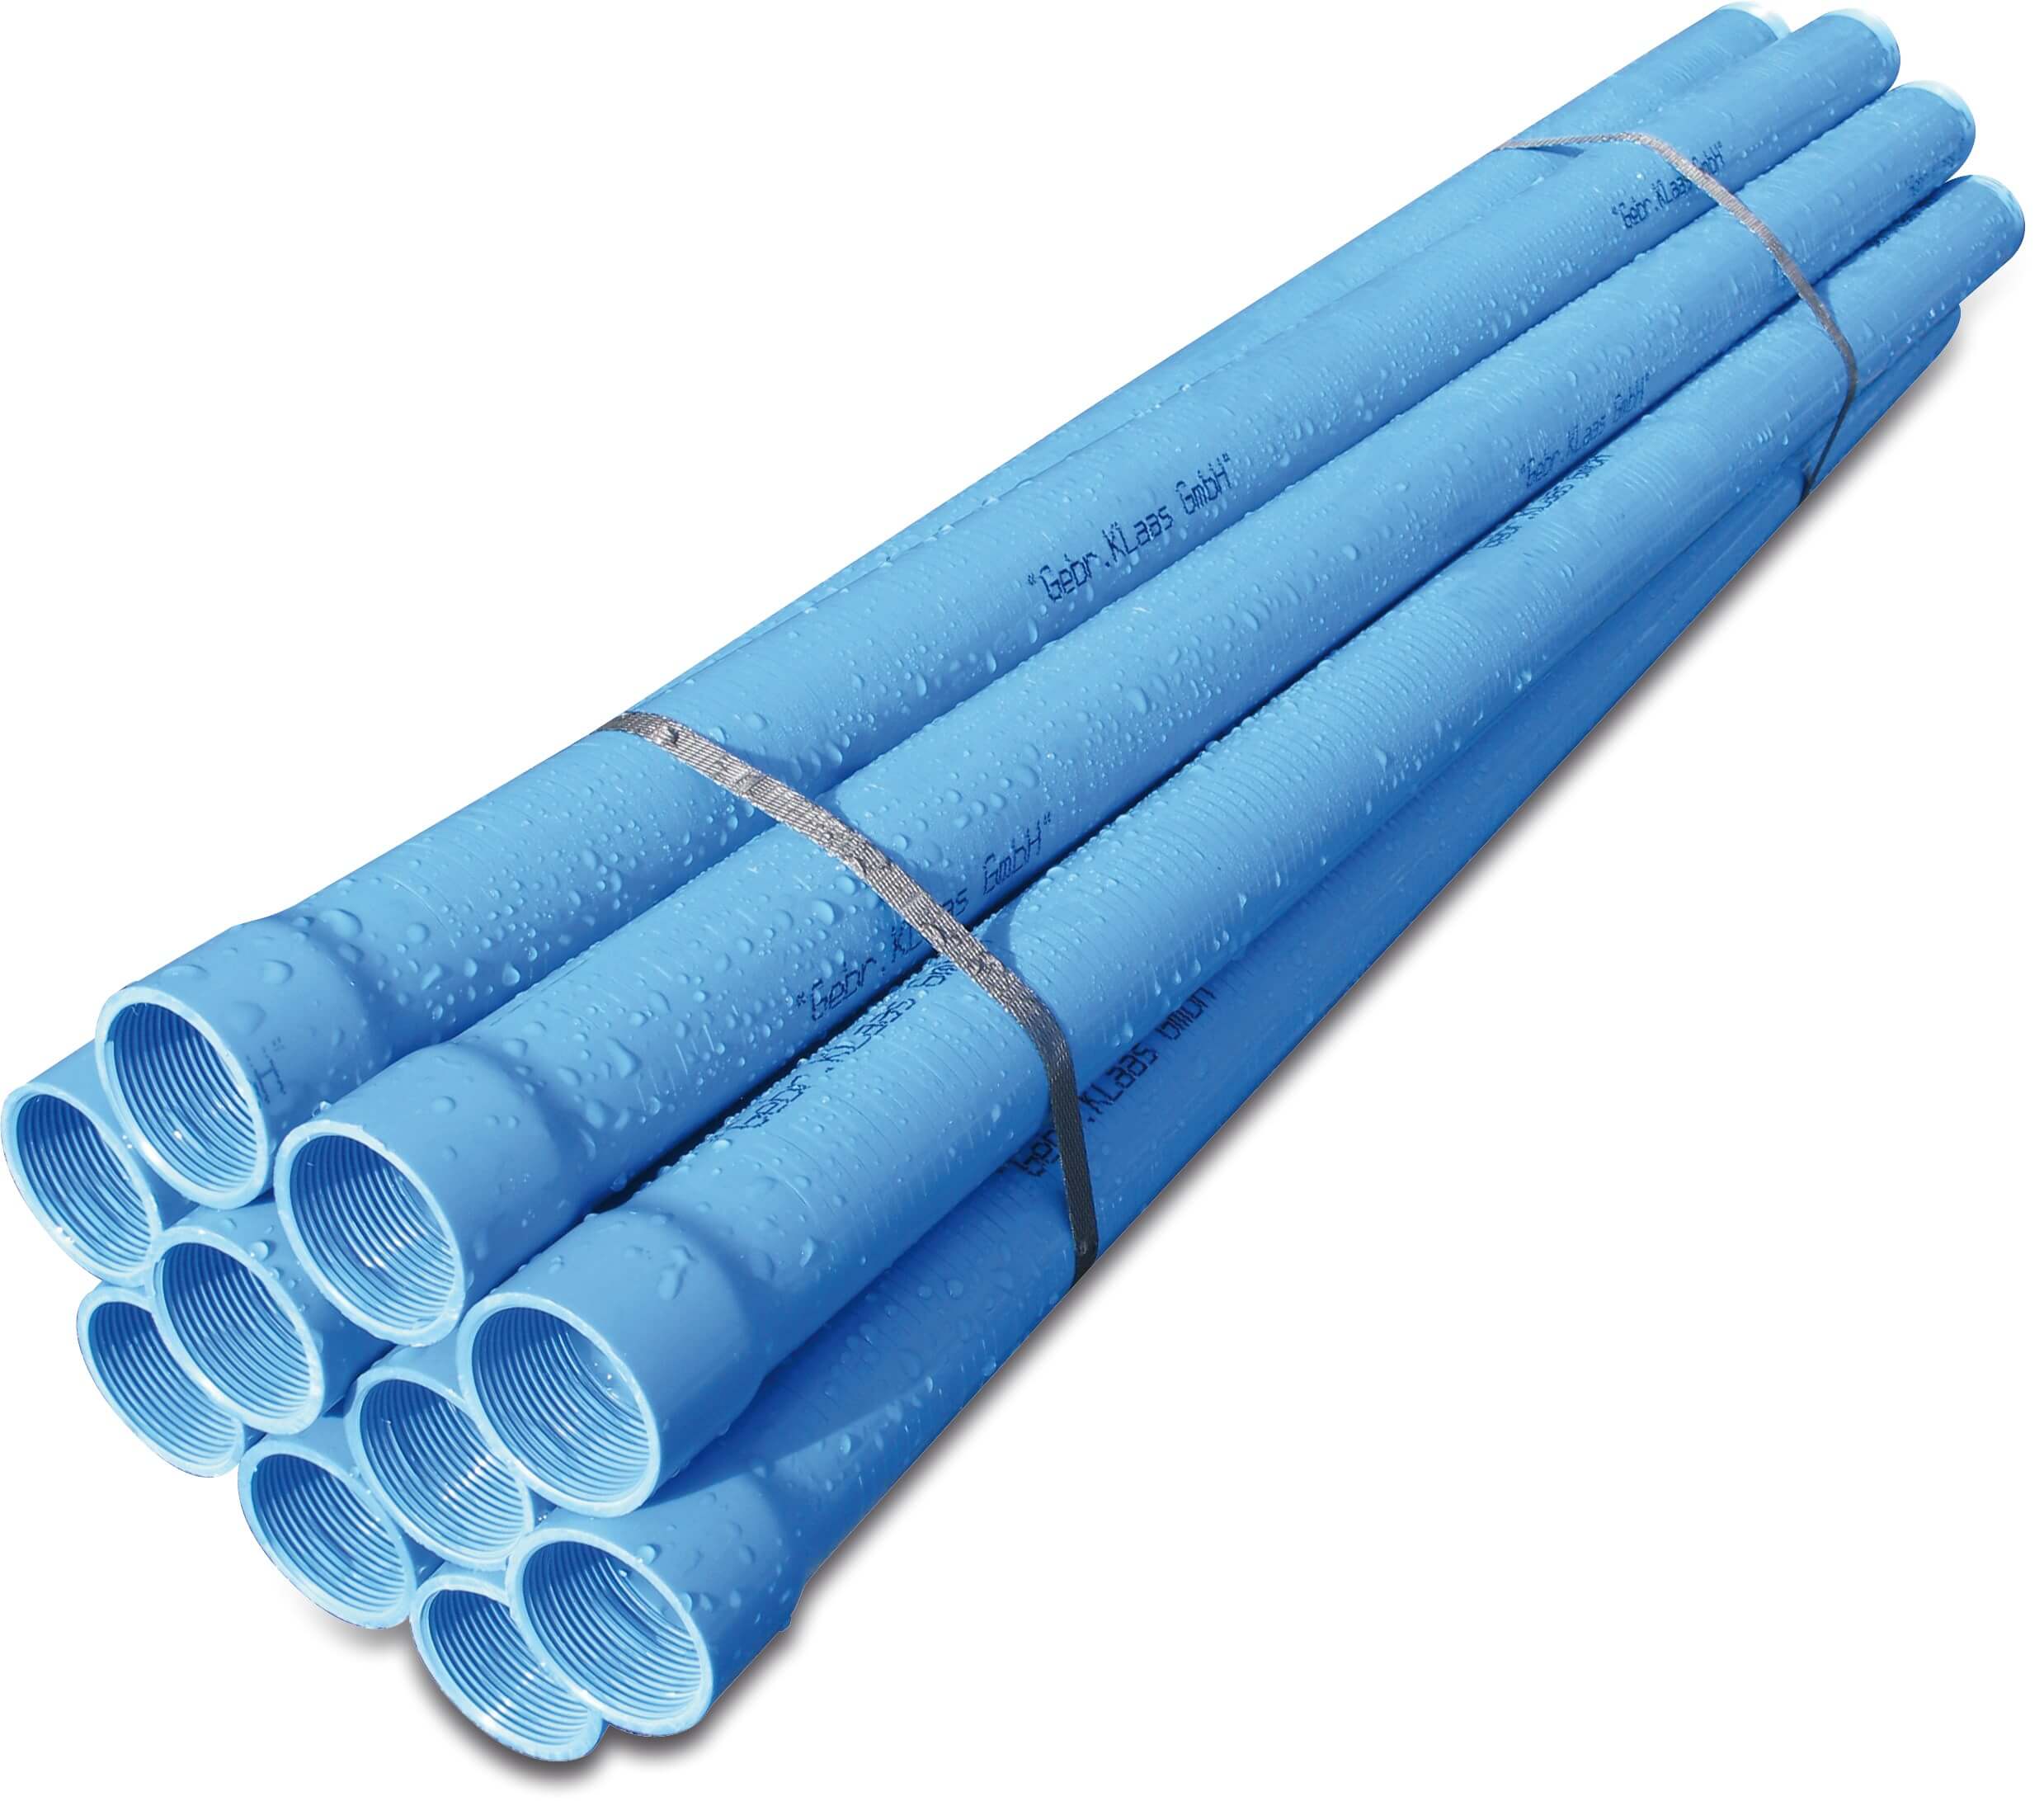 Well screen PVC-U 1 1/4" female thread x male thread 0,3 mm blue 1m